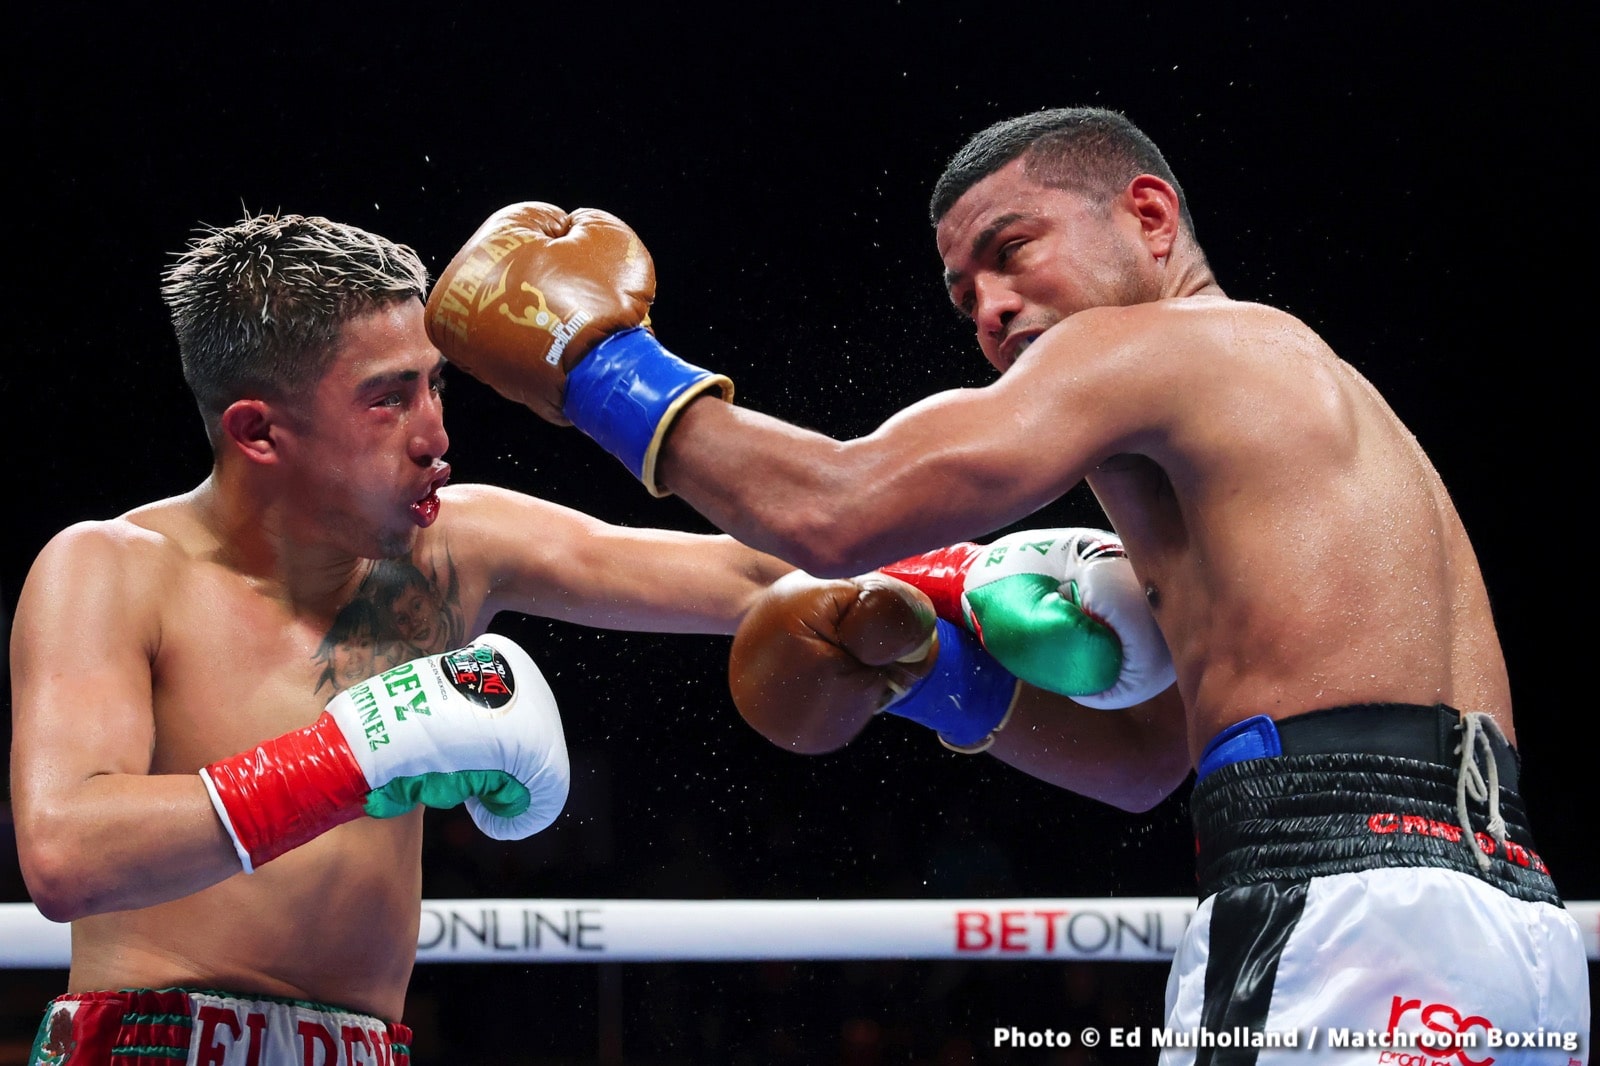 Roman Gonzalez boxing image / photo